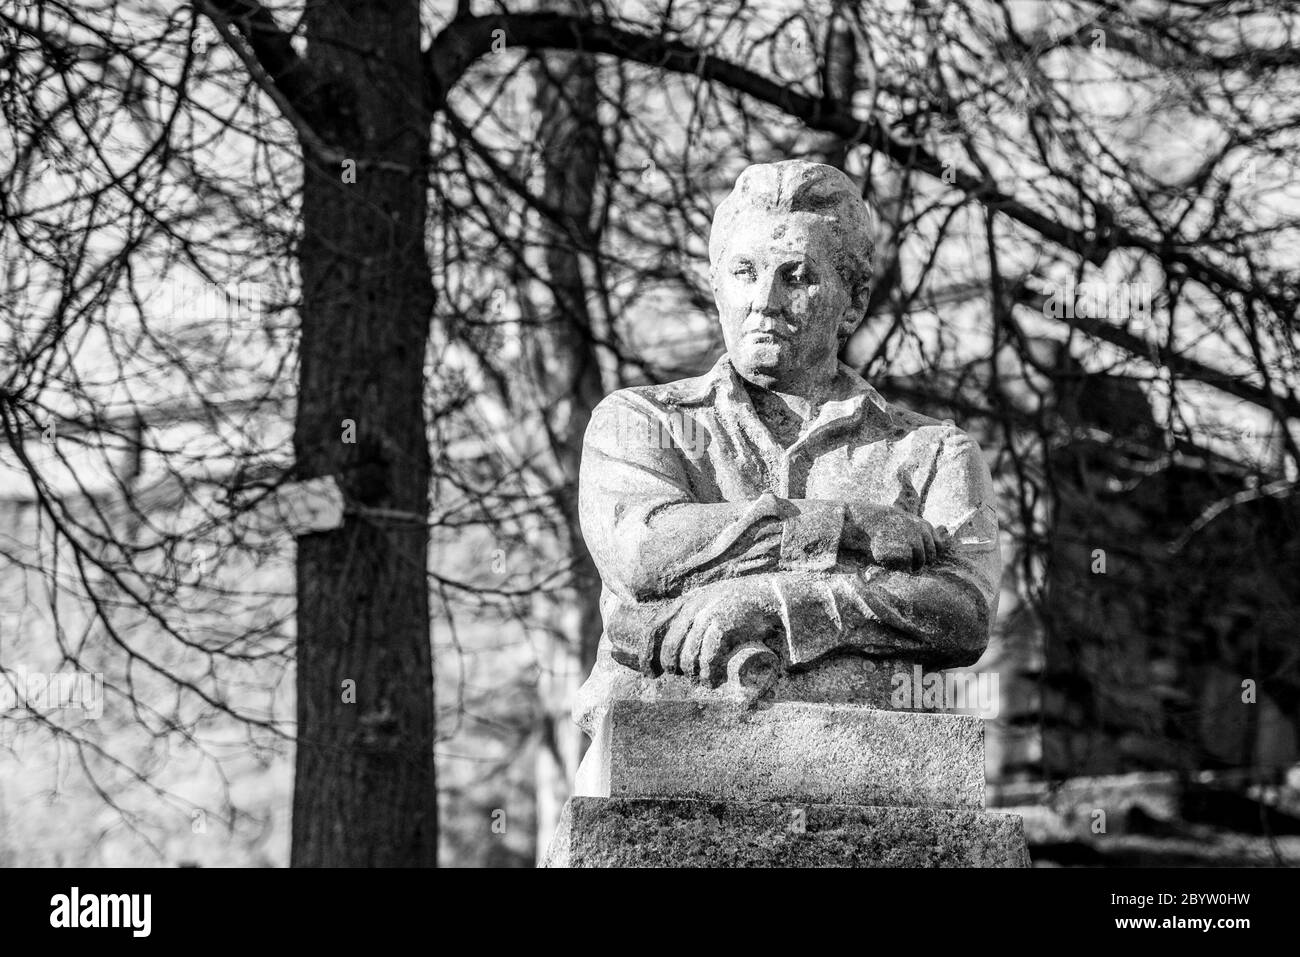 LIPNICE NAD SAZAVOU, CZECH REPUBLIC - DECEMBER 31, 2018: Memorial with busta of Jaroslav Hasek - Czech writer and journalist. Author of novel The Good Soldier Svejk. Black and white image. Stock Photo